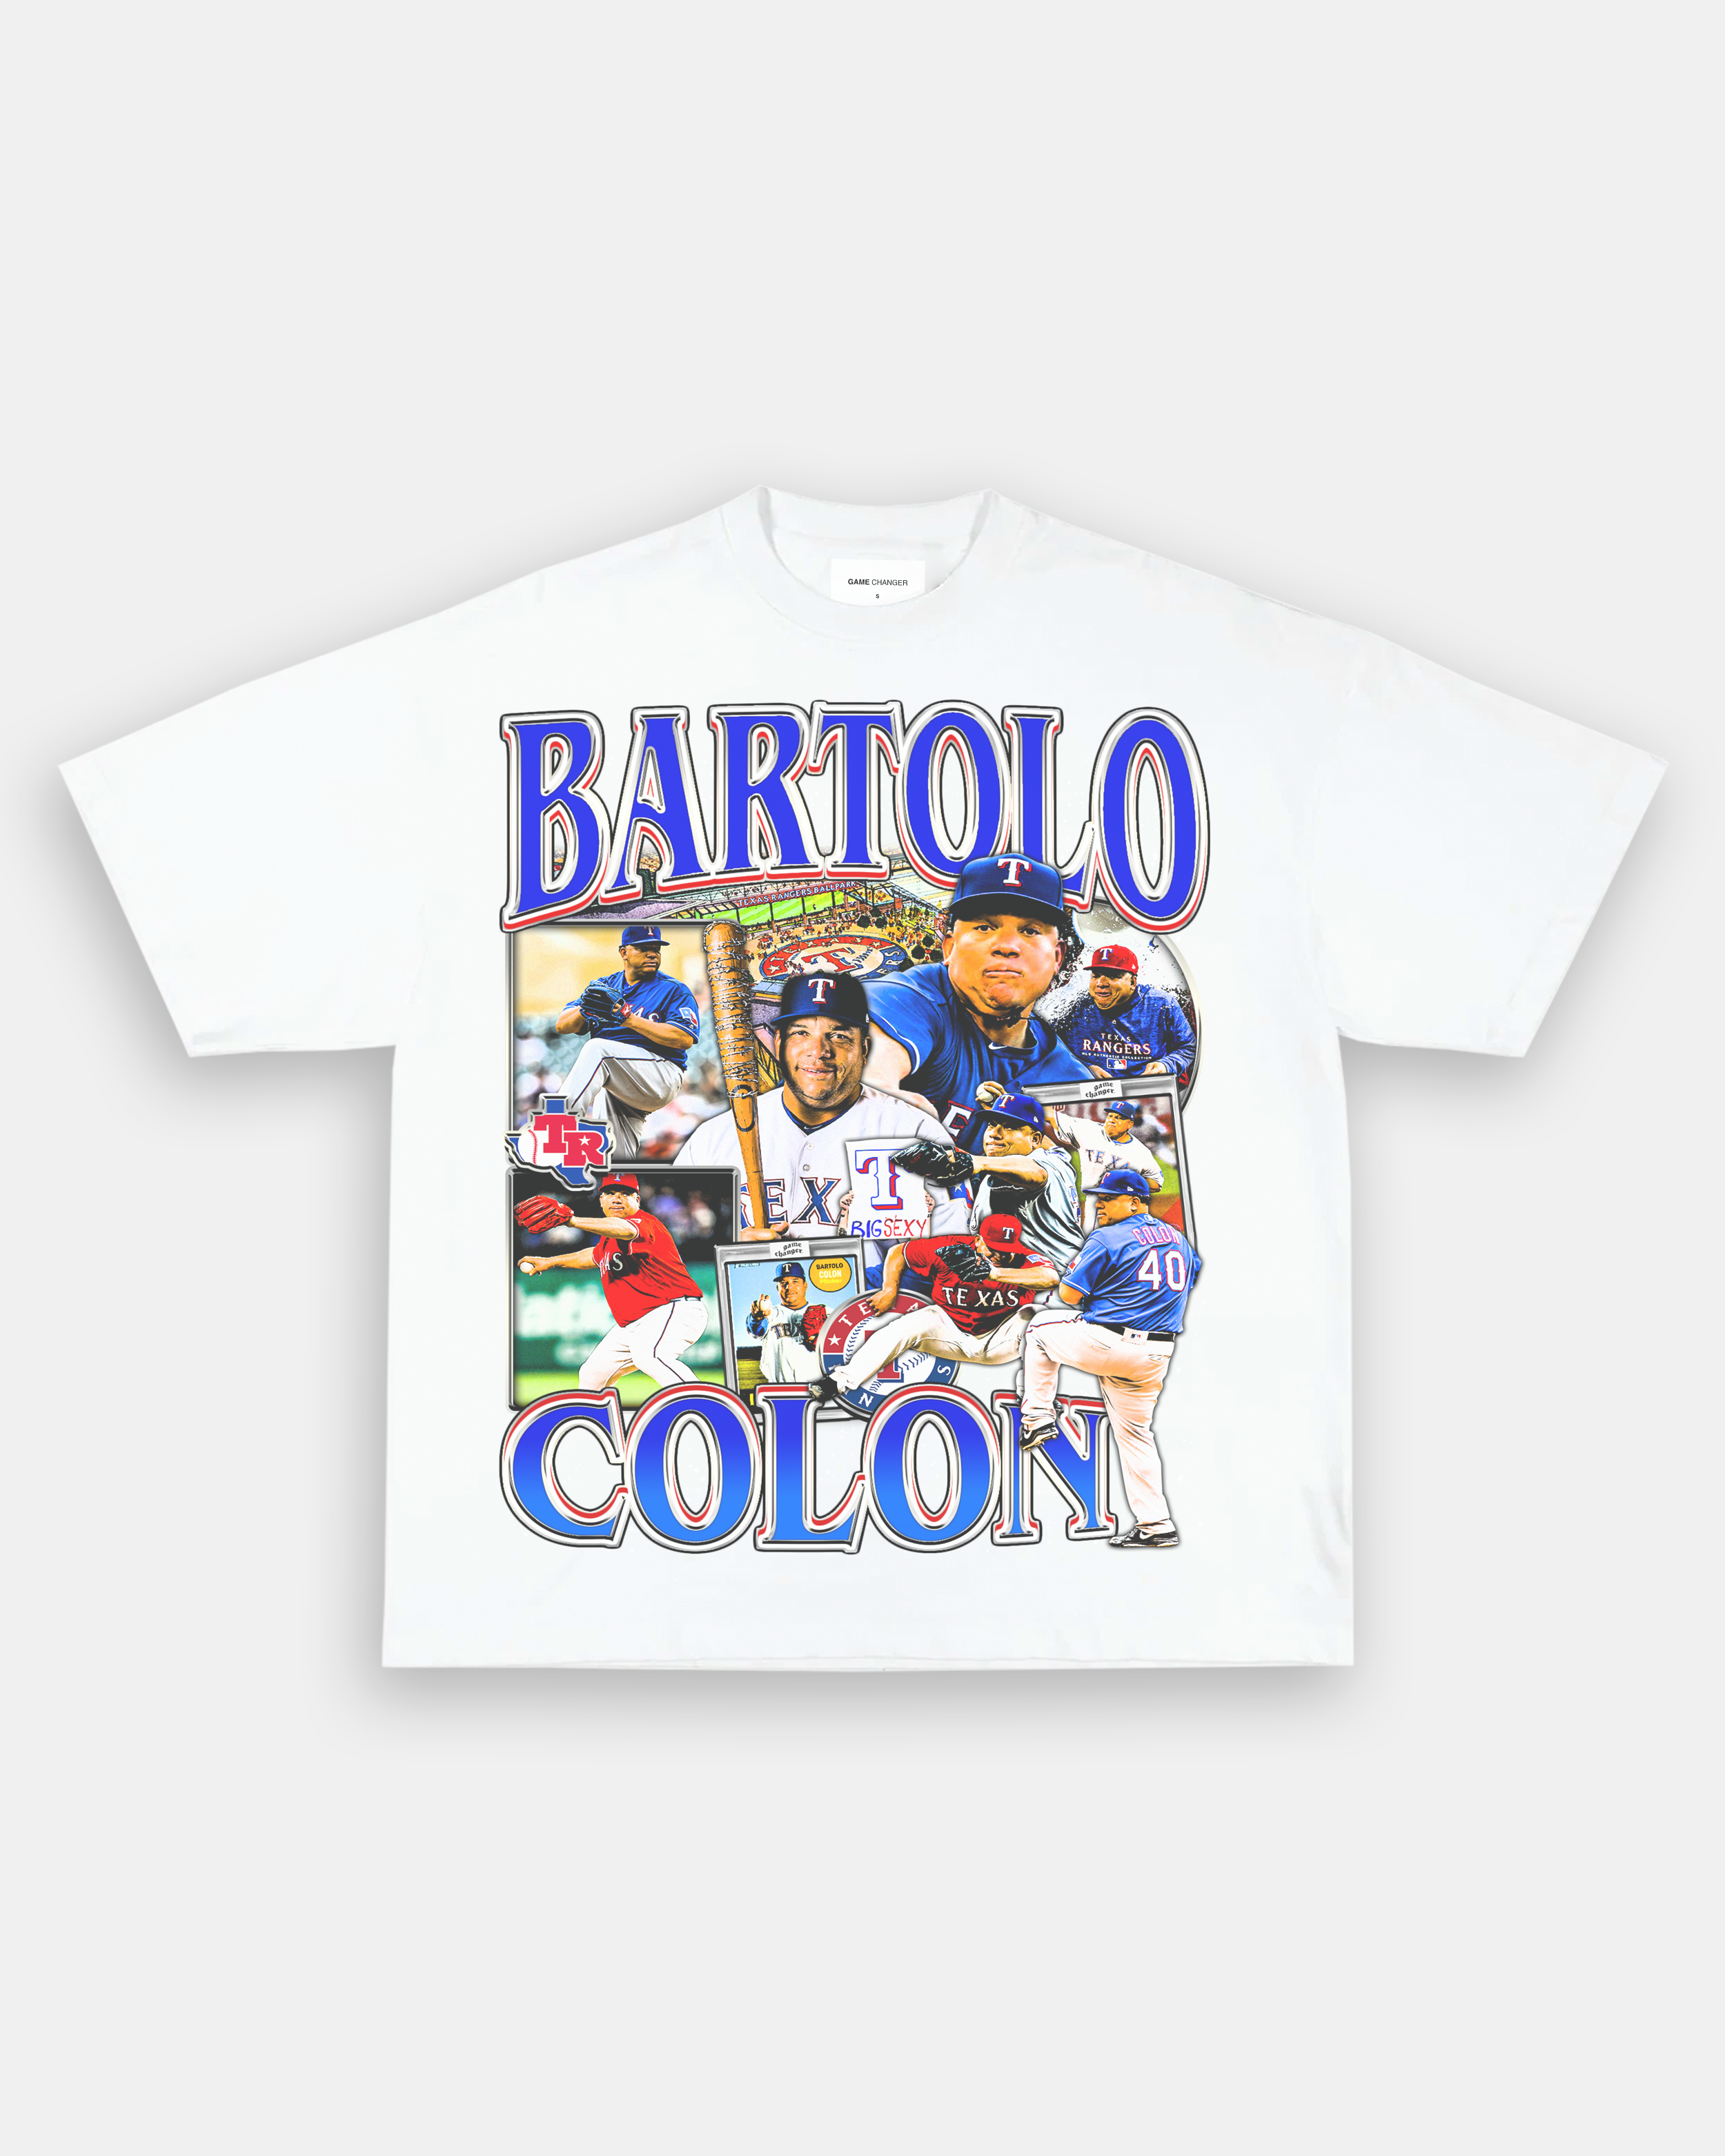 Bartolo Colon at the bat t-shirt now shipping - Amazin' Avenue